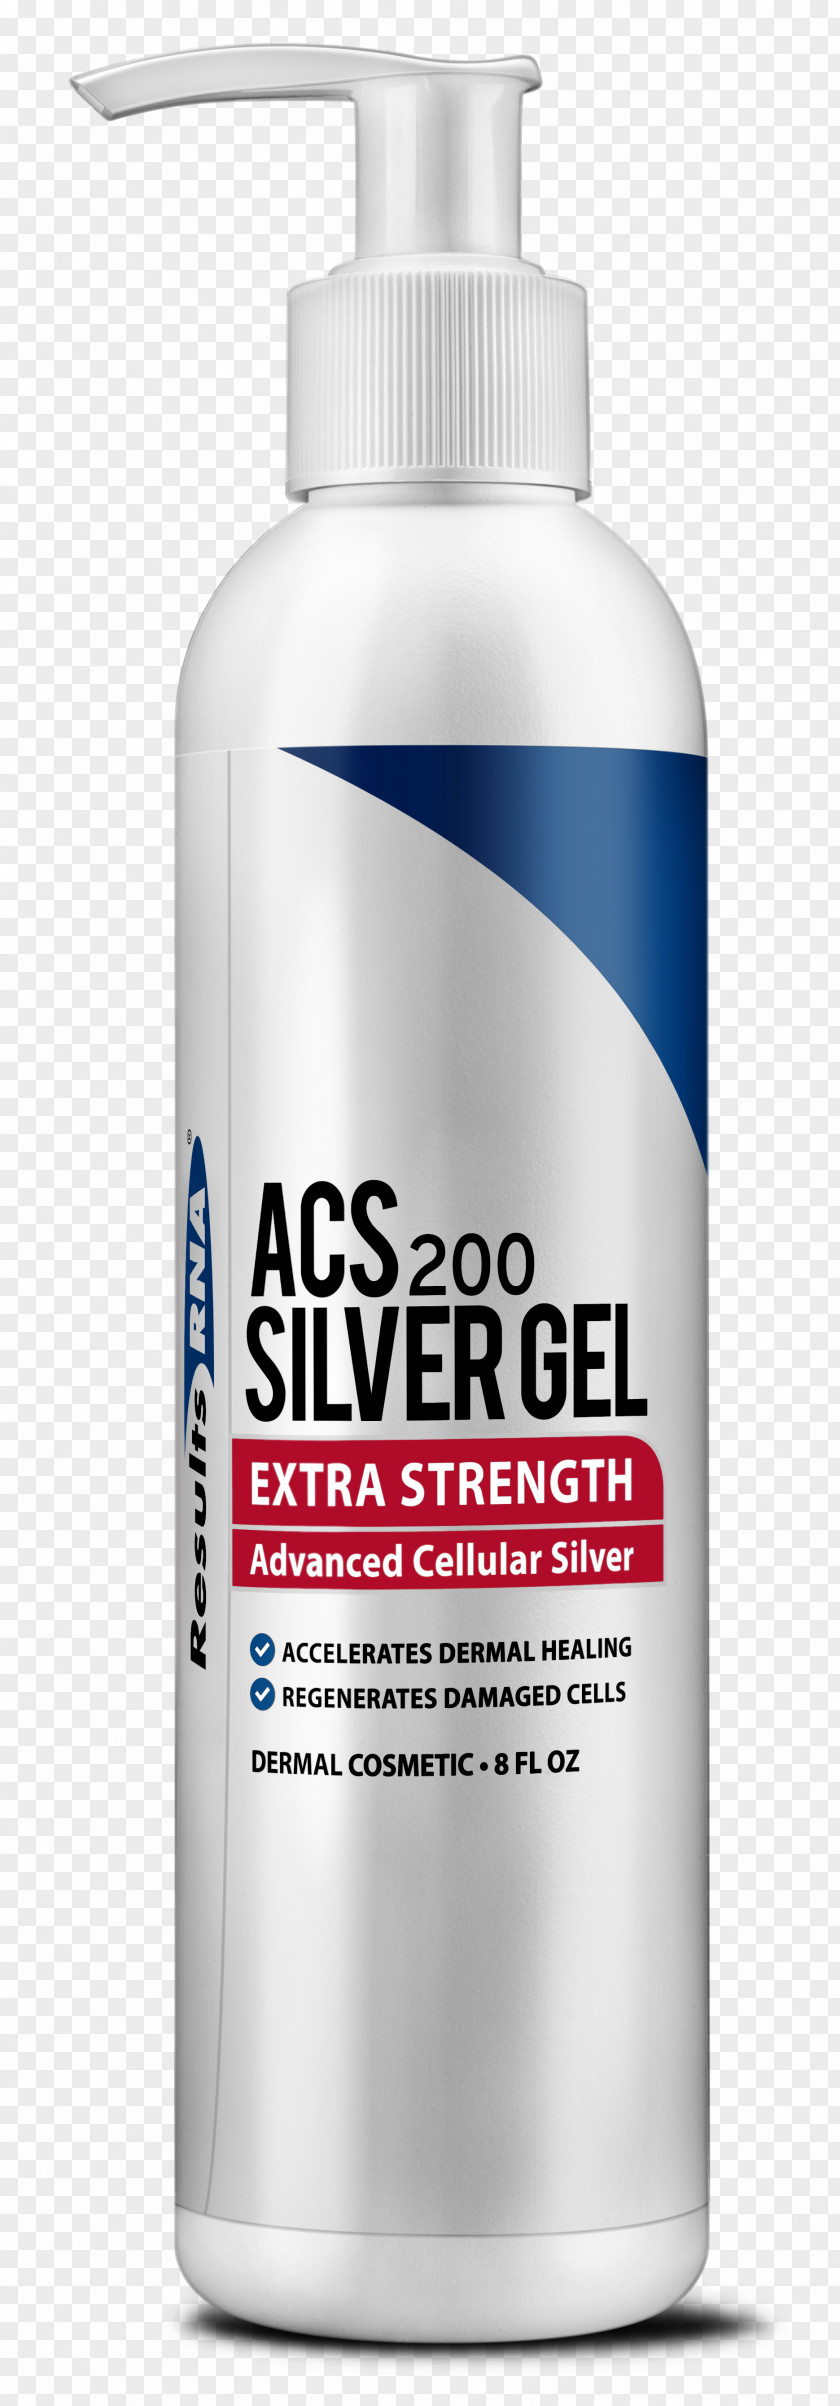 Silver Gel Topical Medication Aerosol Spray Cream PNG